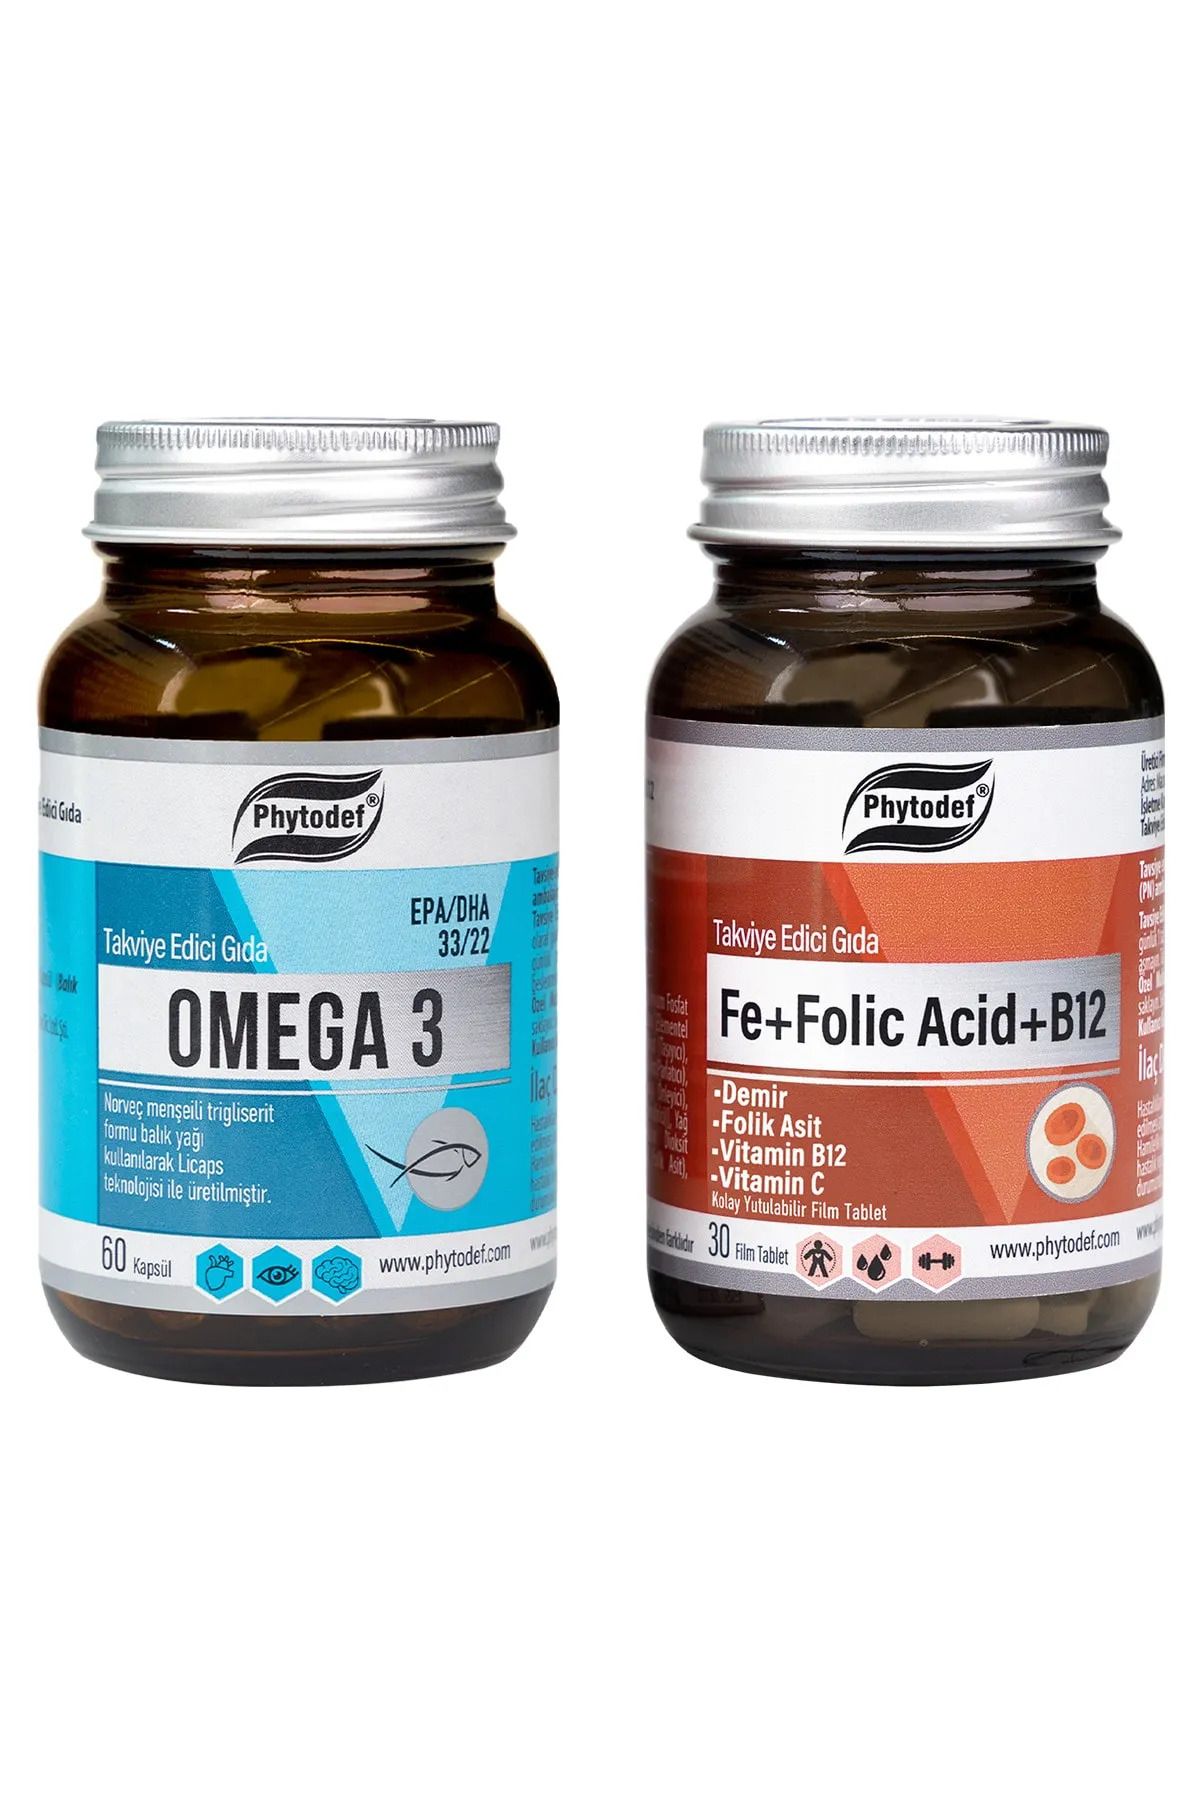 Phytodef Demir + Folik Asit + Vitamin B12 + Vitamin C - 30 Tablet & Omega 3 - 60 Jel Kapsül